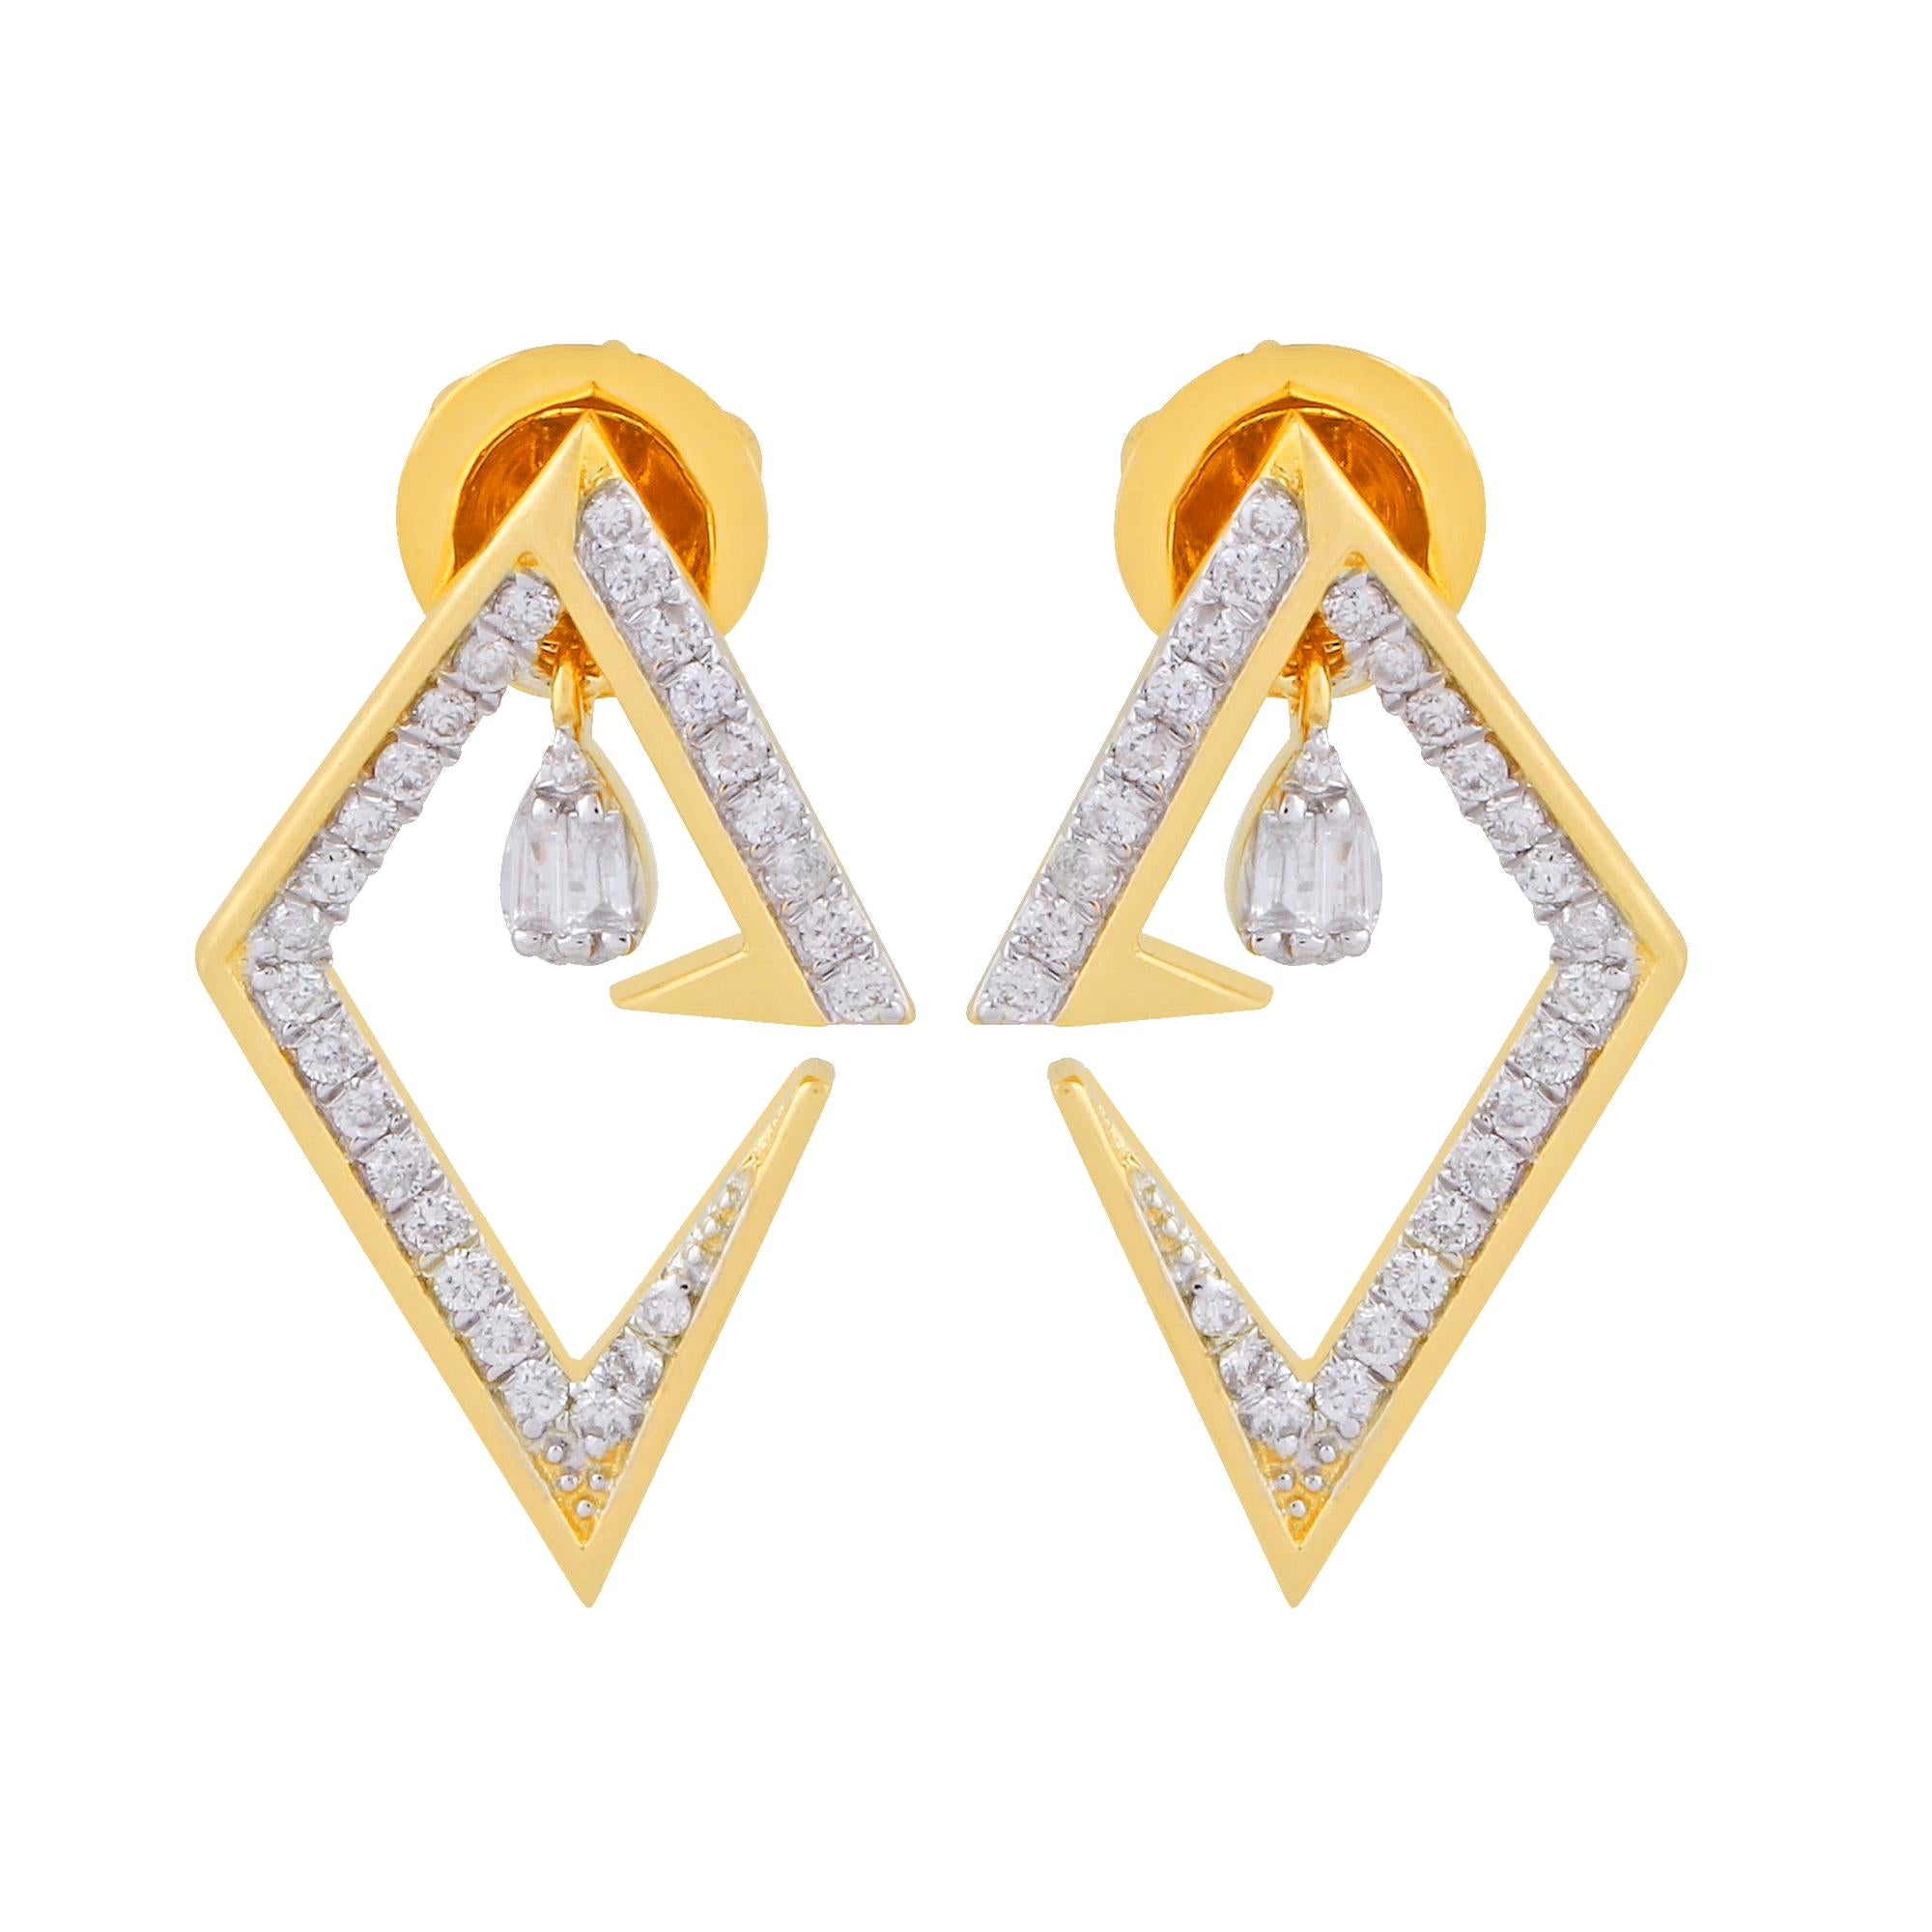 SI Clarity HI Color Diamond Geometric Stud Earrings 18 Karat Yellow Gold Jewelry